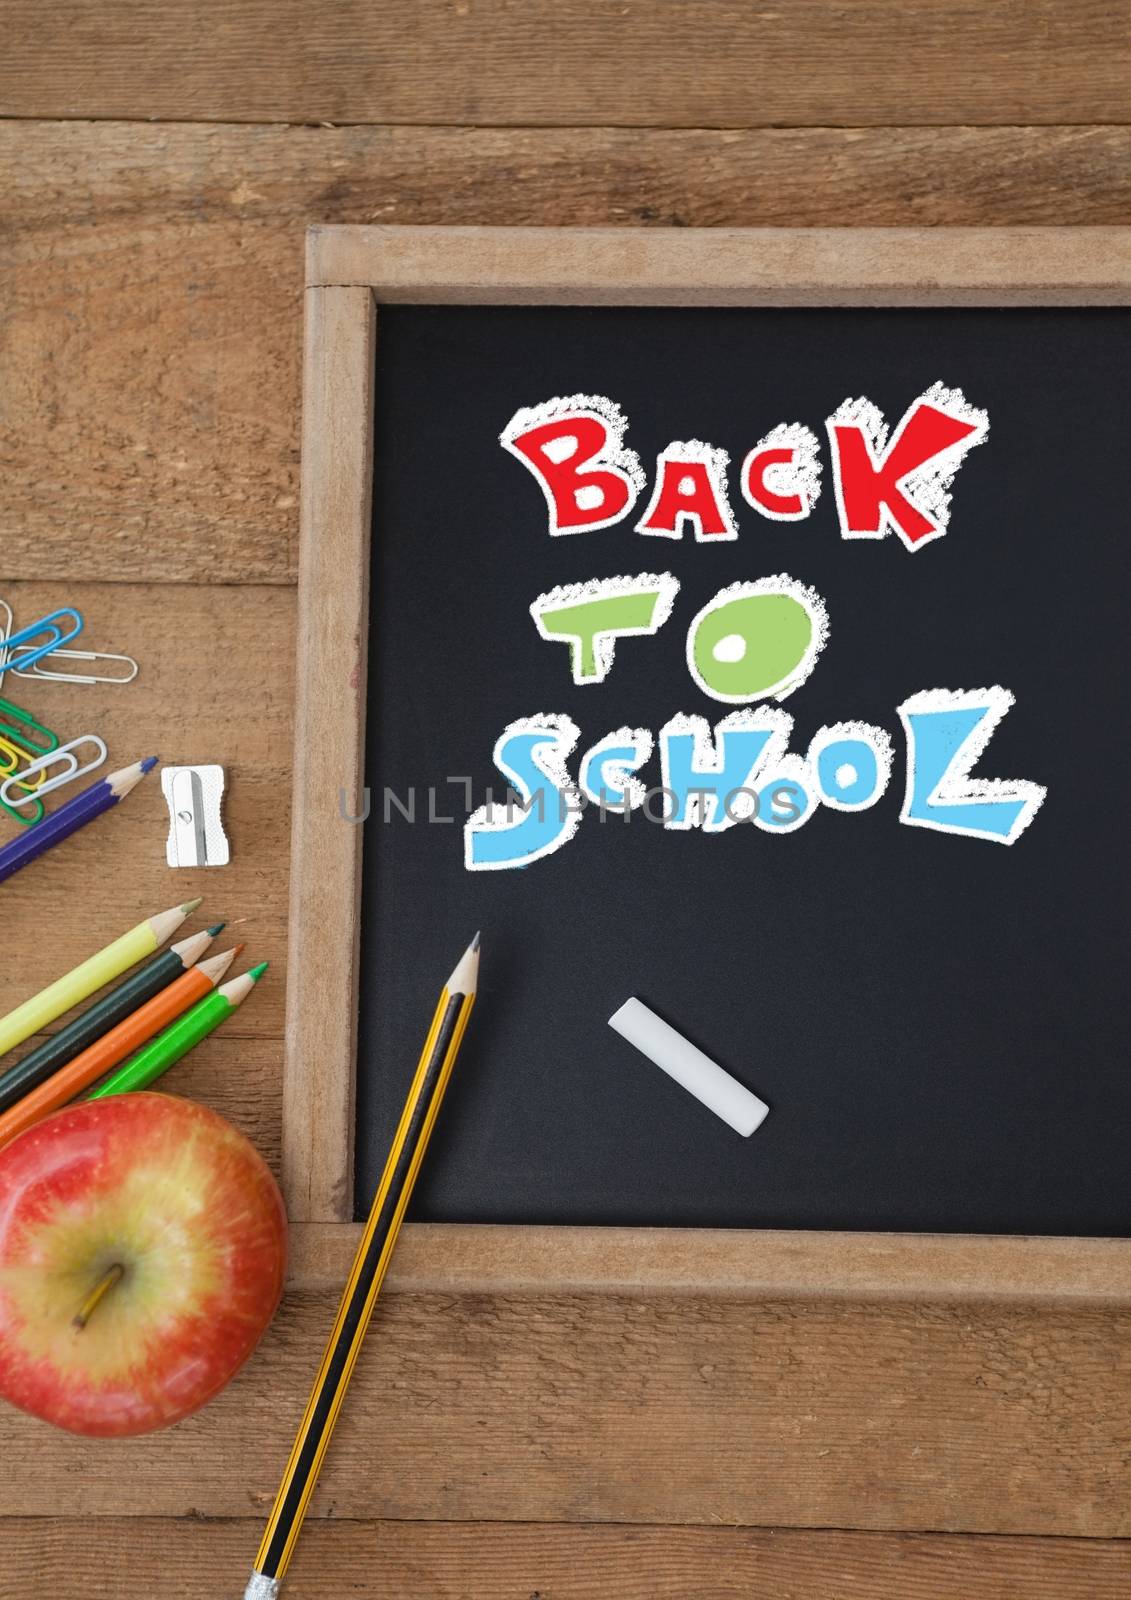 Digital composite of Back to school education writing on blackboard for school